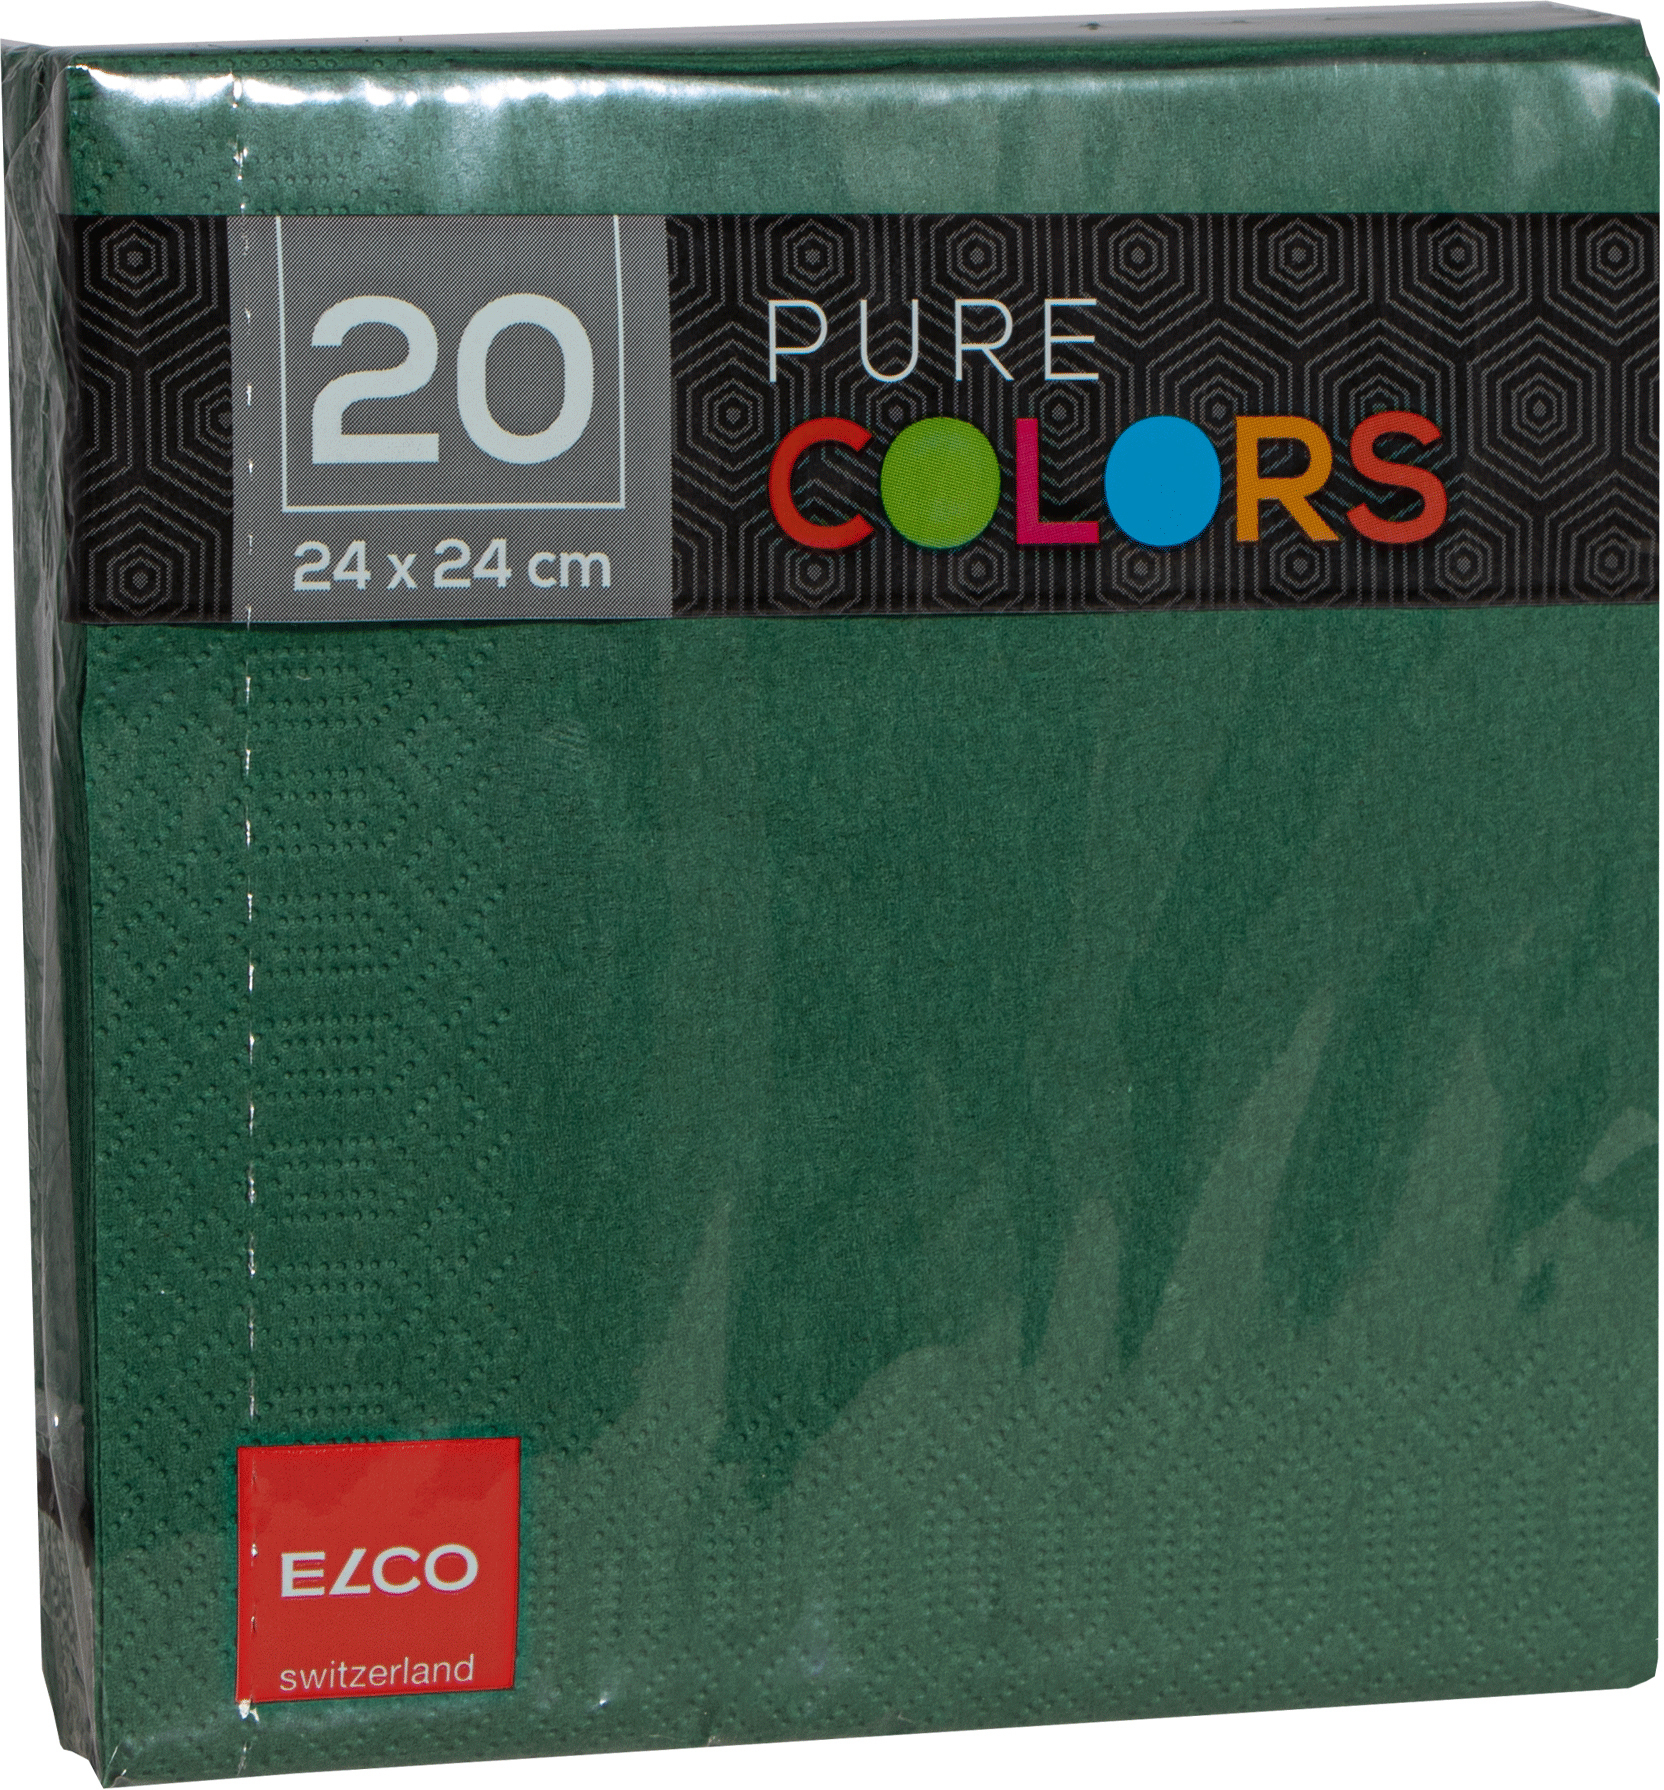 ELCO Serviettes tissue 24x24cm PC234020-056 3 plis, vert foncé 20pcs. 3 plis, vert foncé 20pcs.